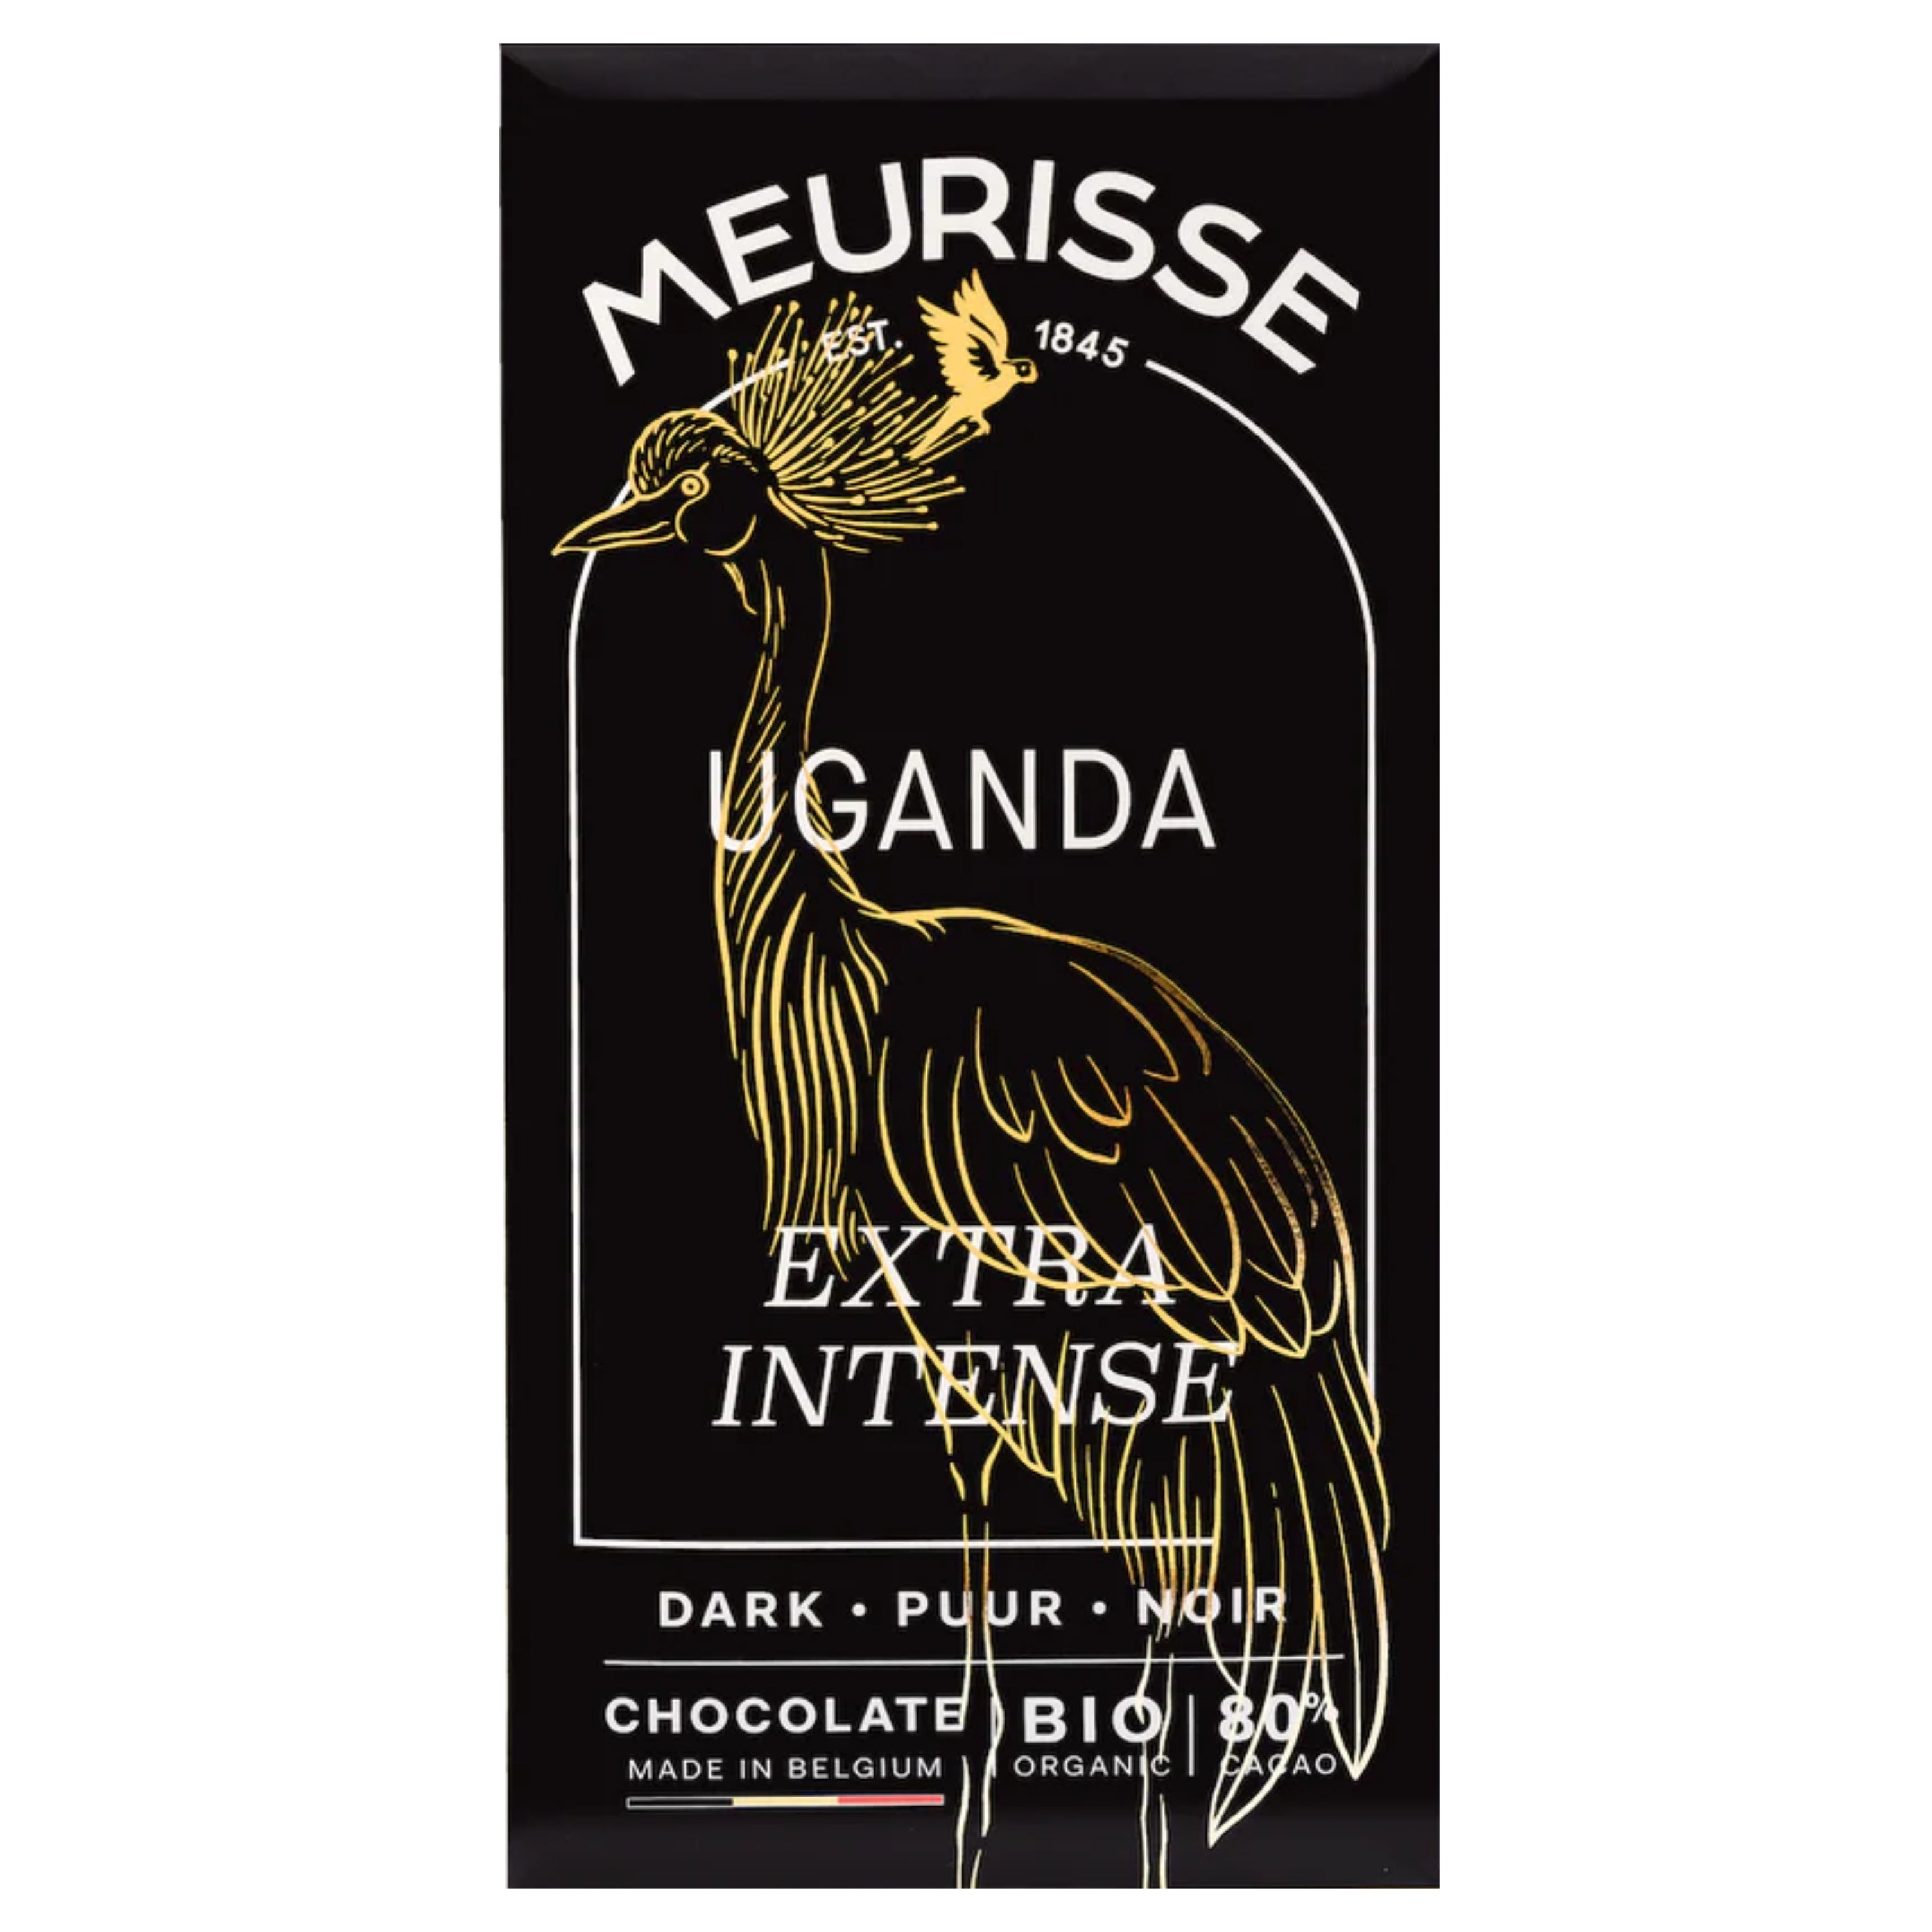 Meurisse Dark chocolate from Uganda 80% – 3.5oz